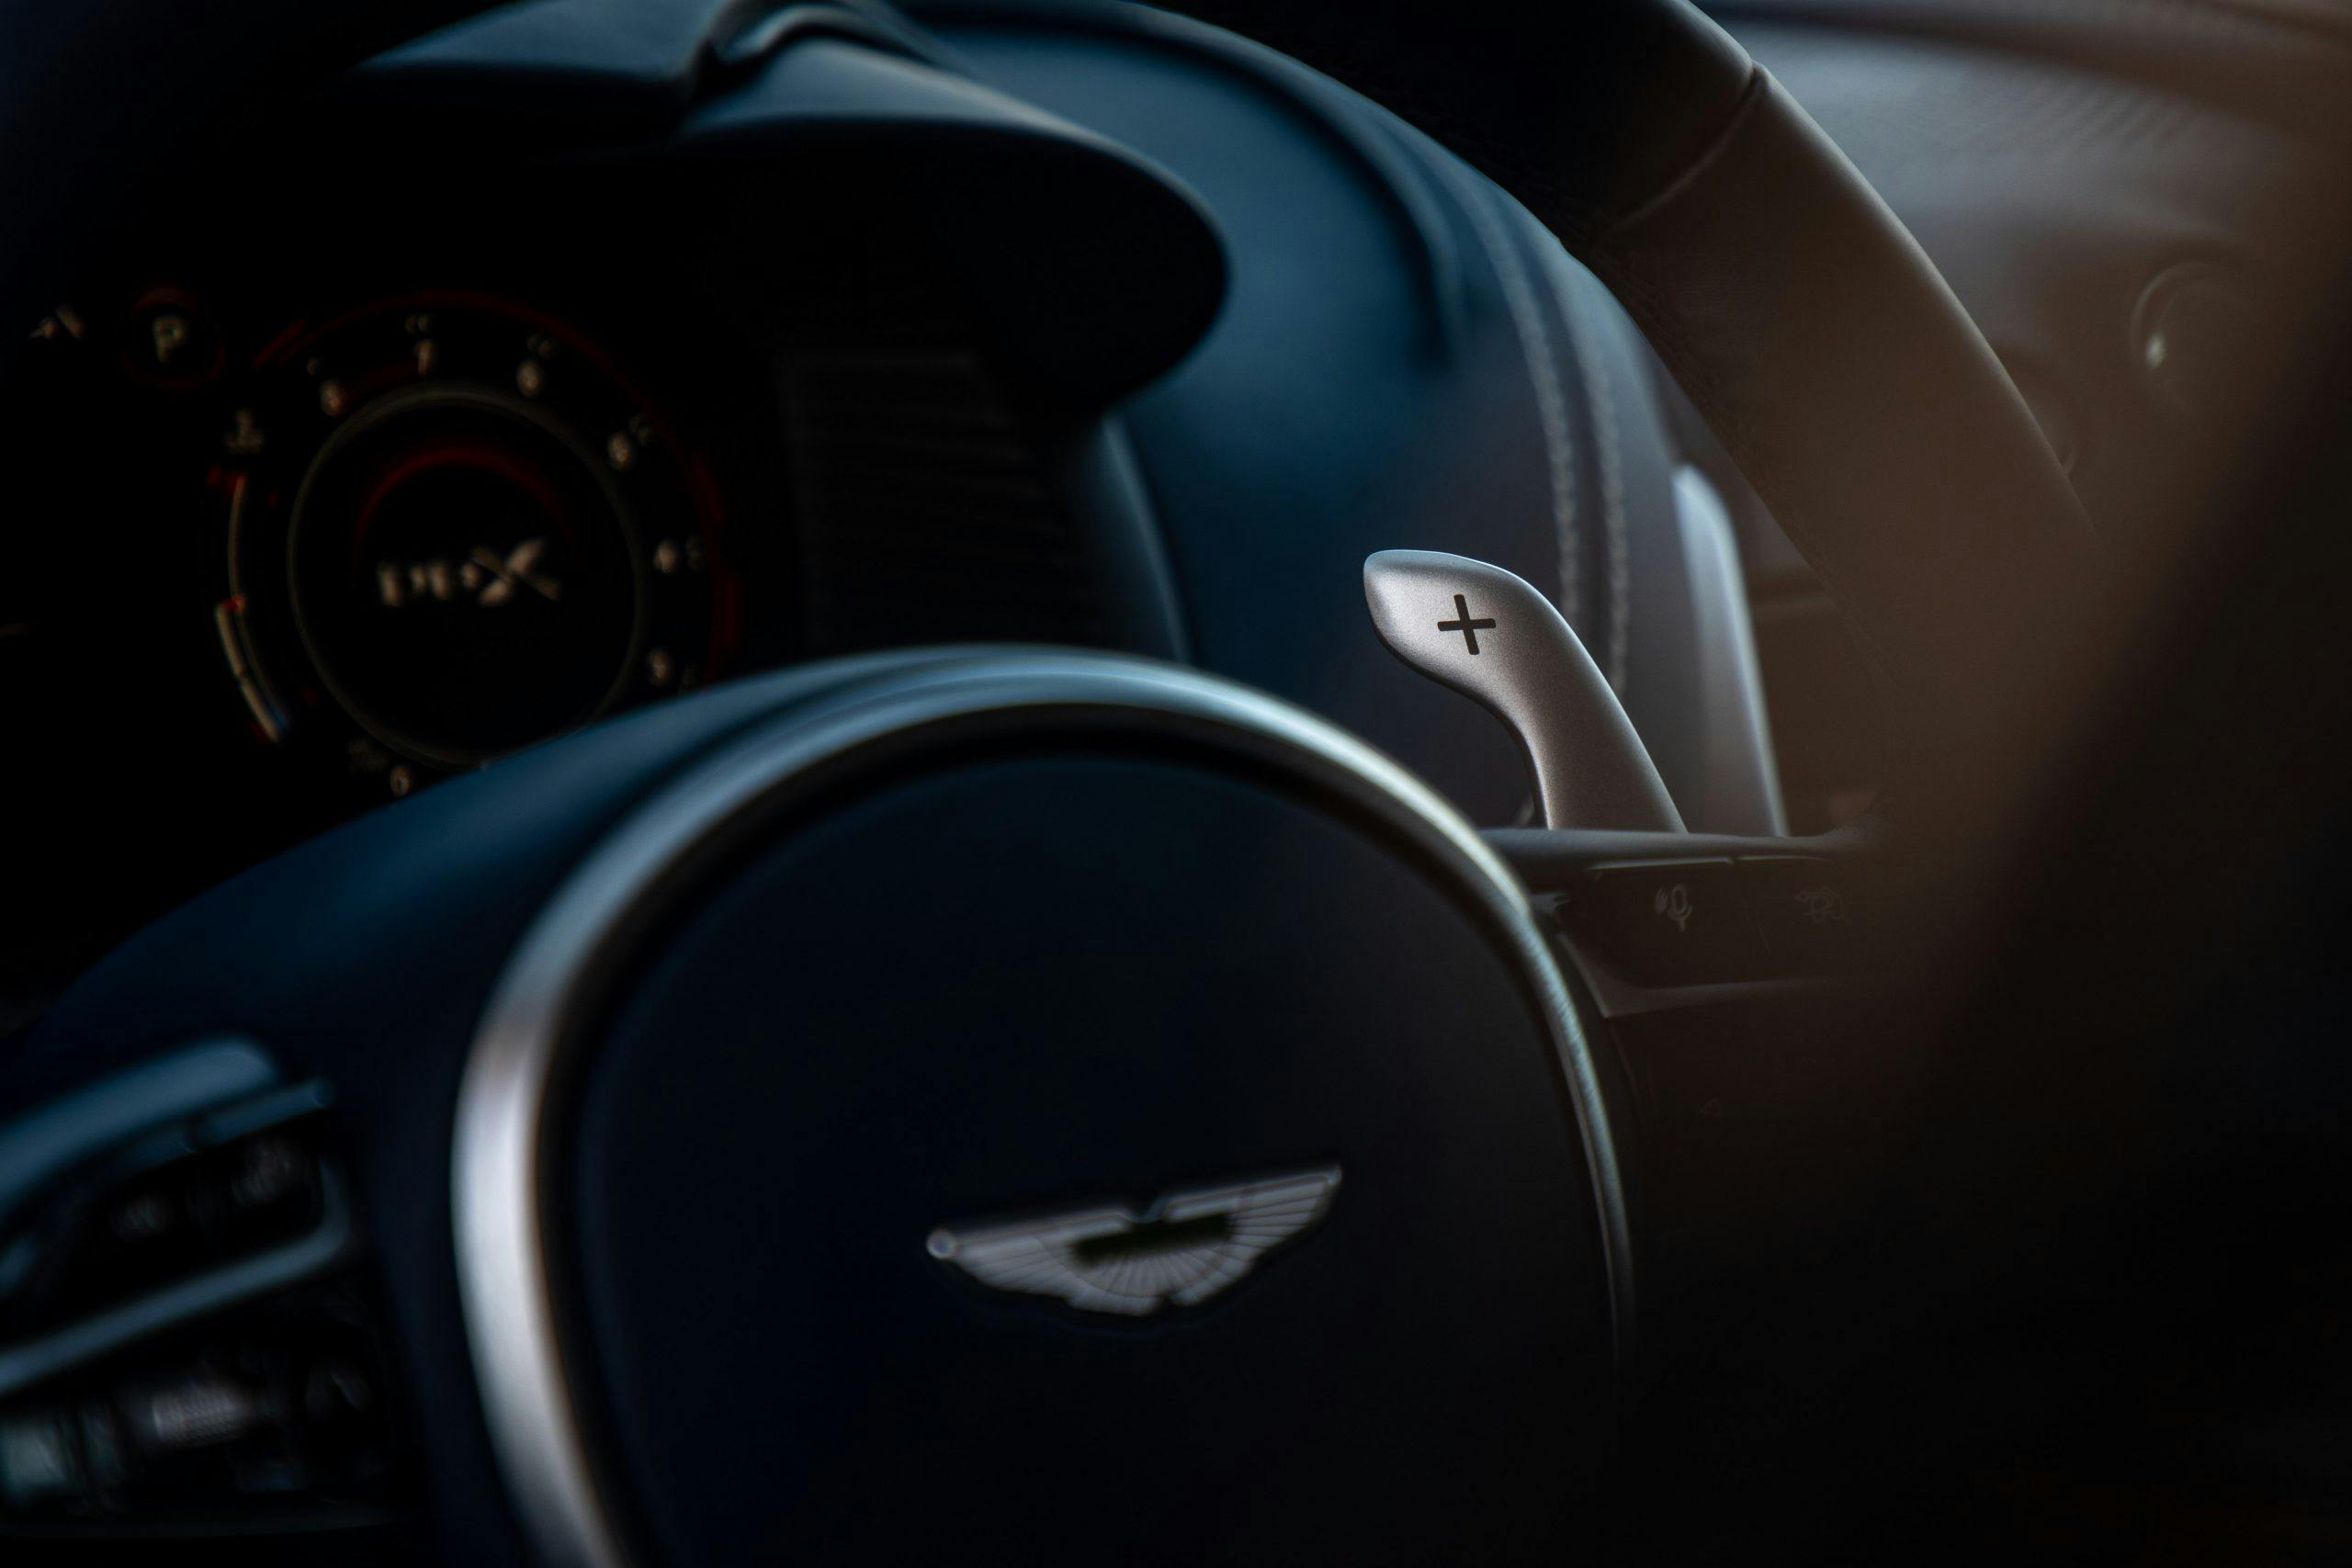 2021 Aston Martin DBX interior paddle shifter detail